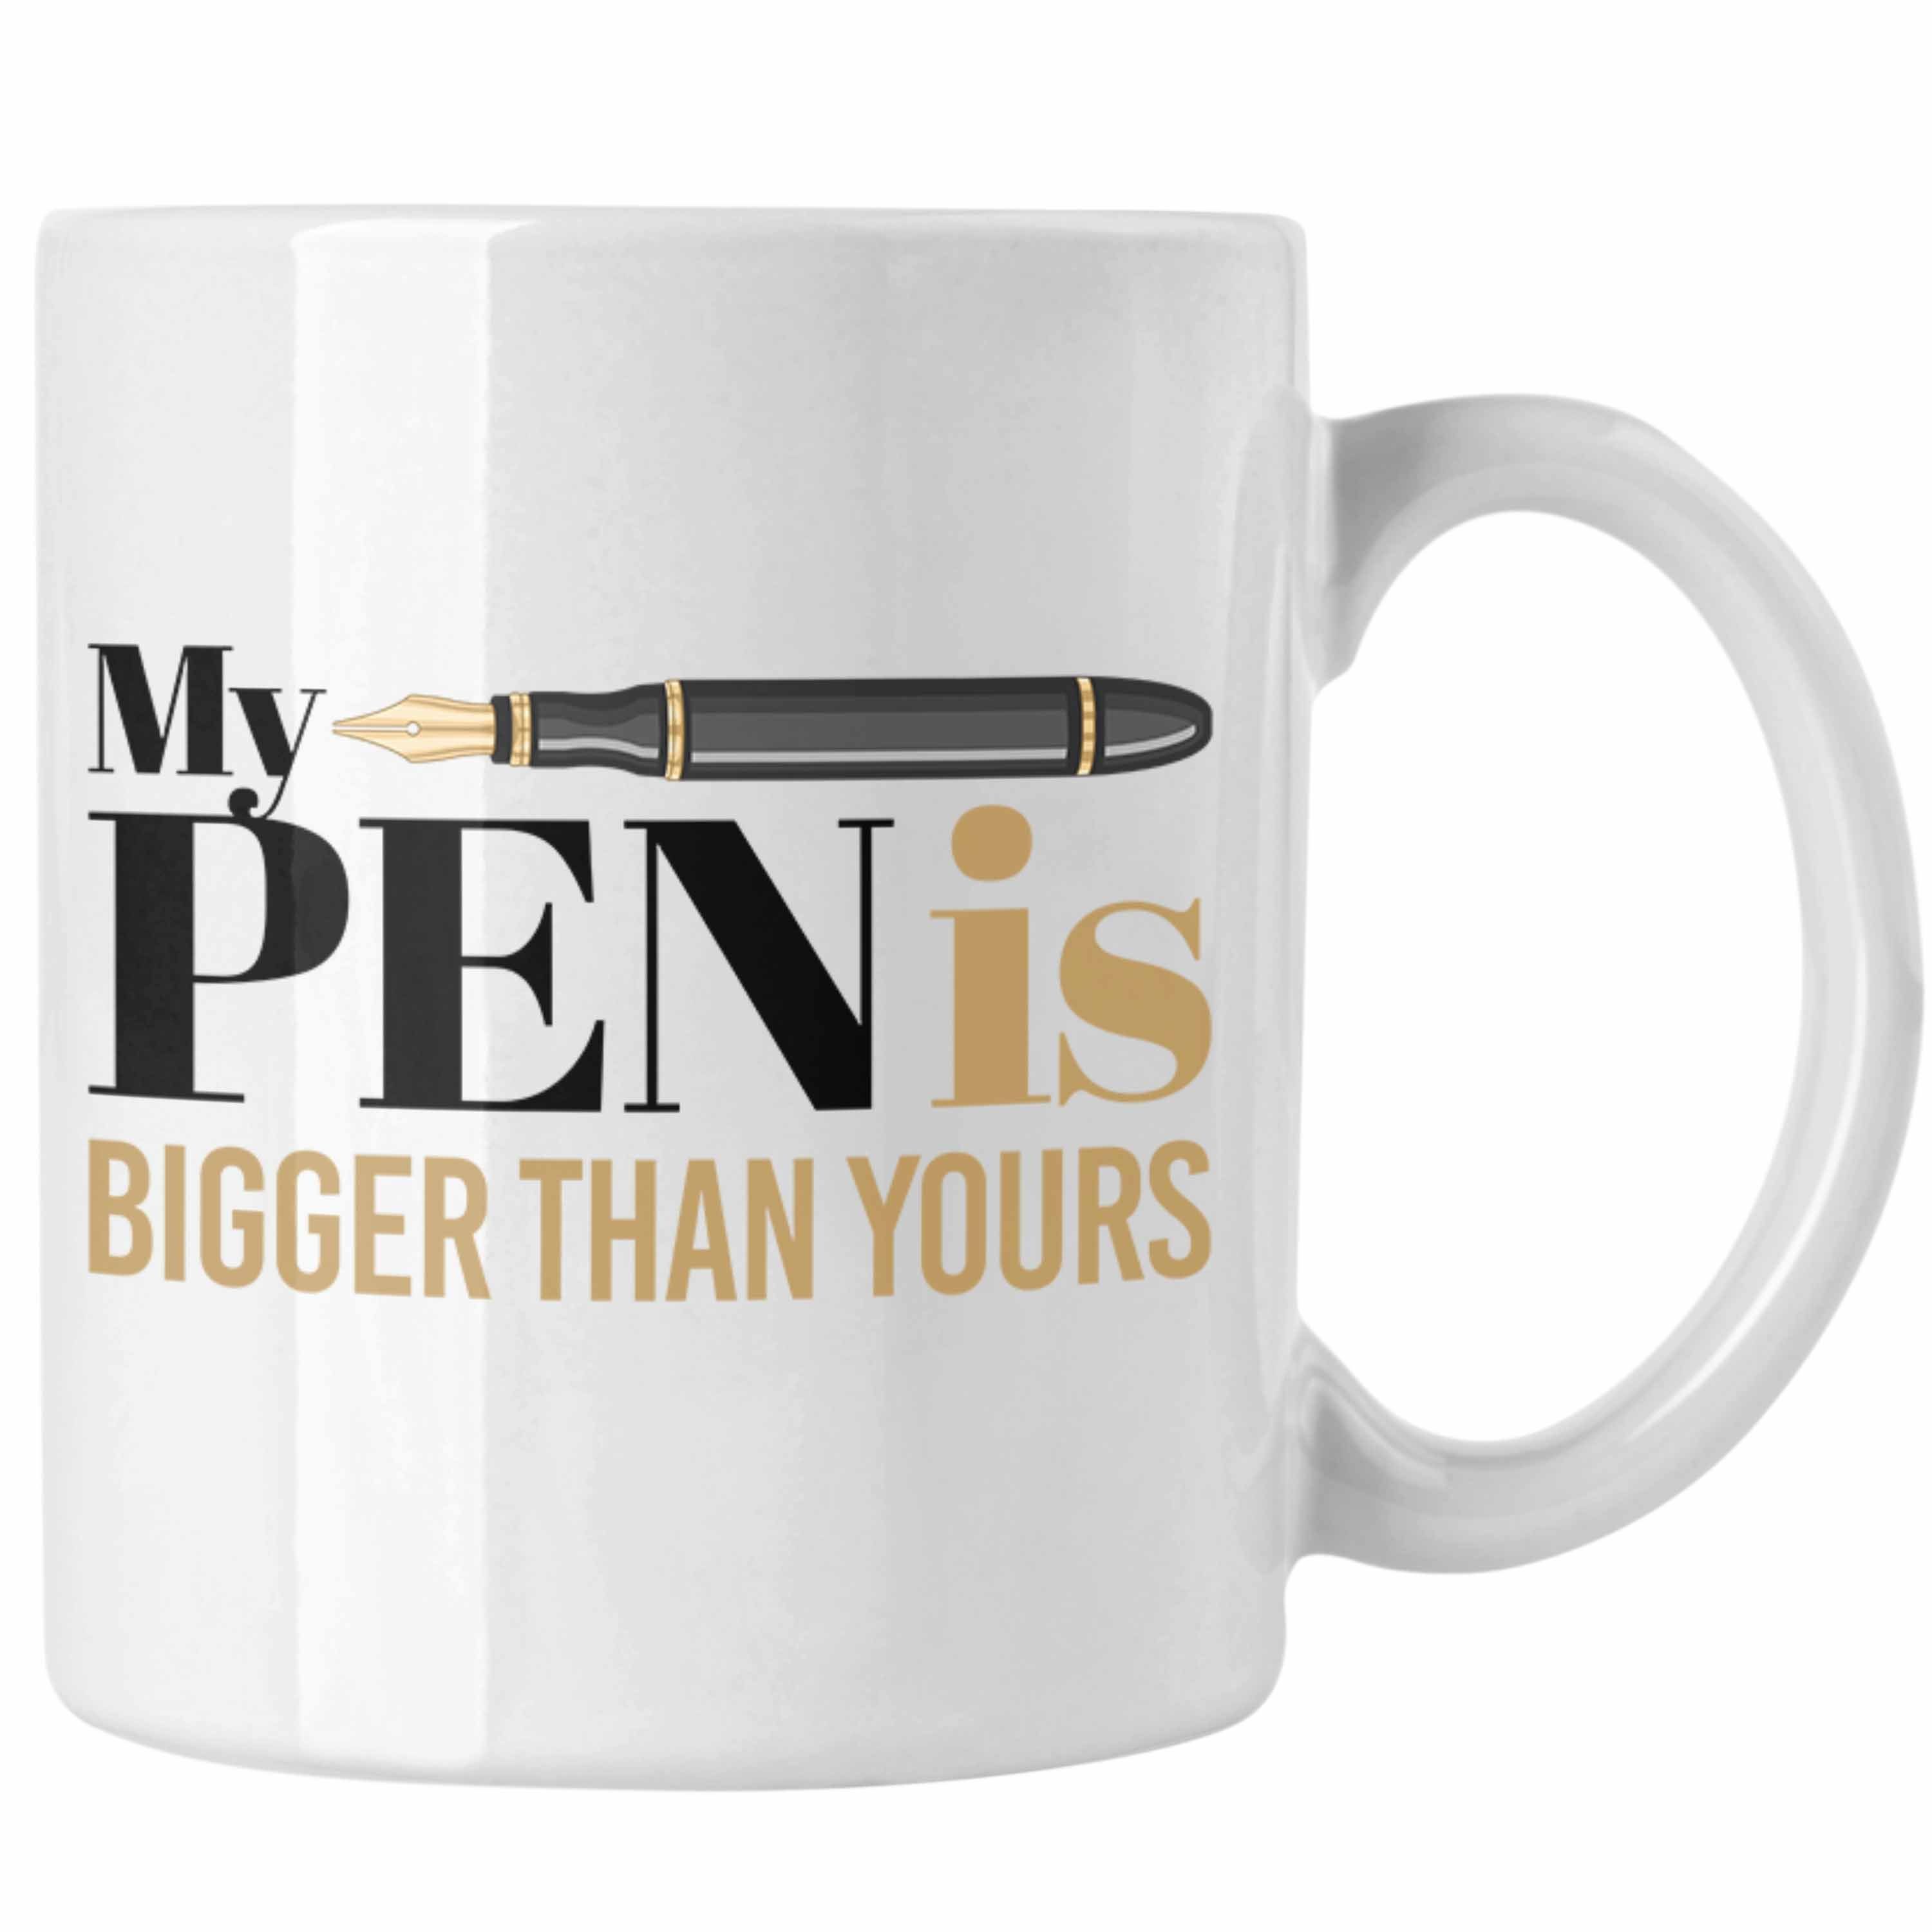 Trendation Tasse My Pen Is Bigger Than Your Tasse Geschenk Witziger Weiss